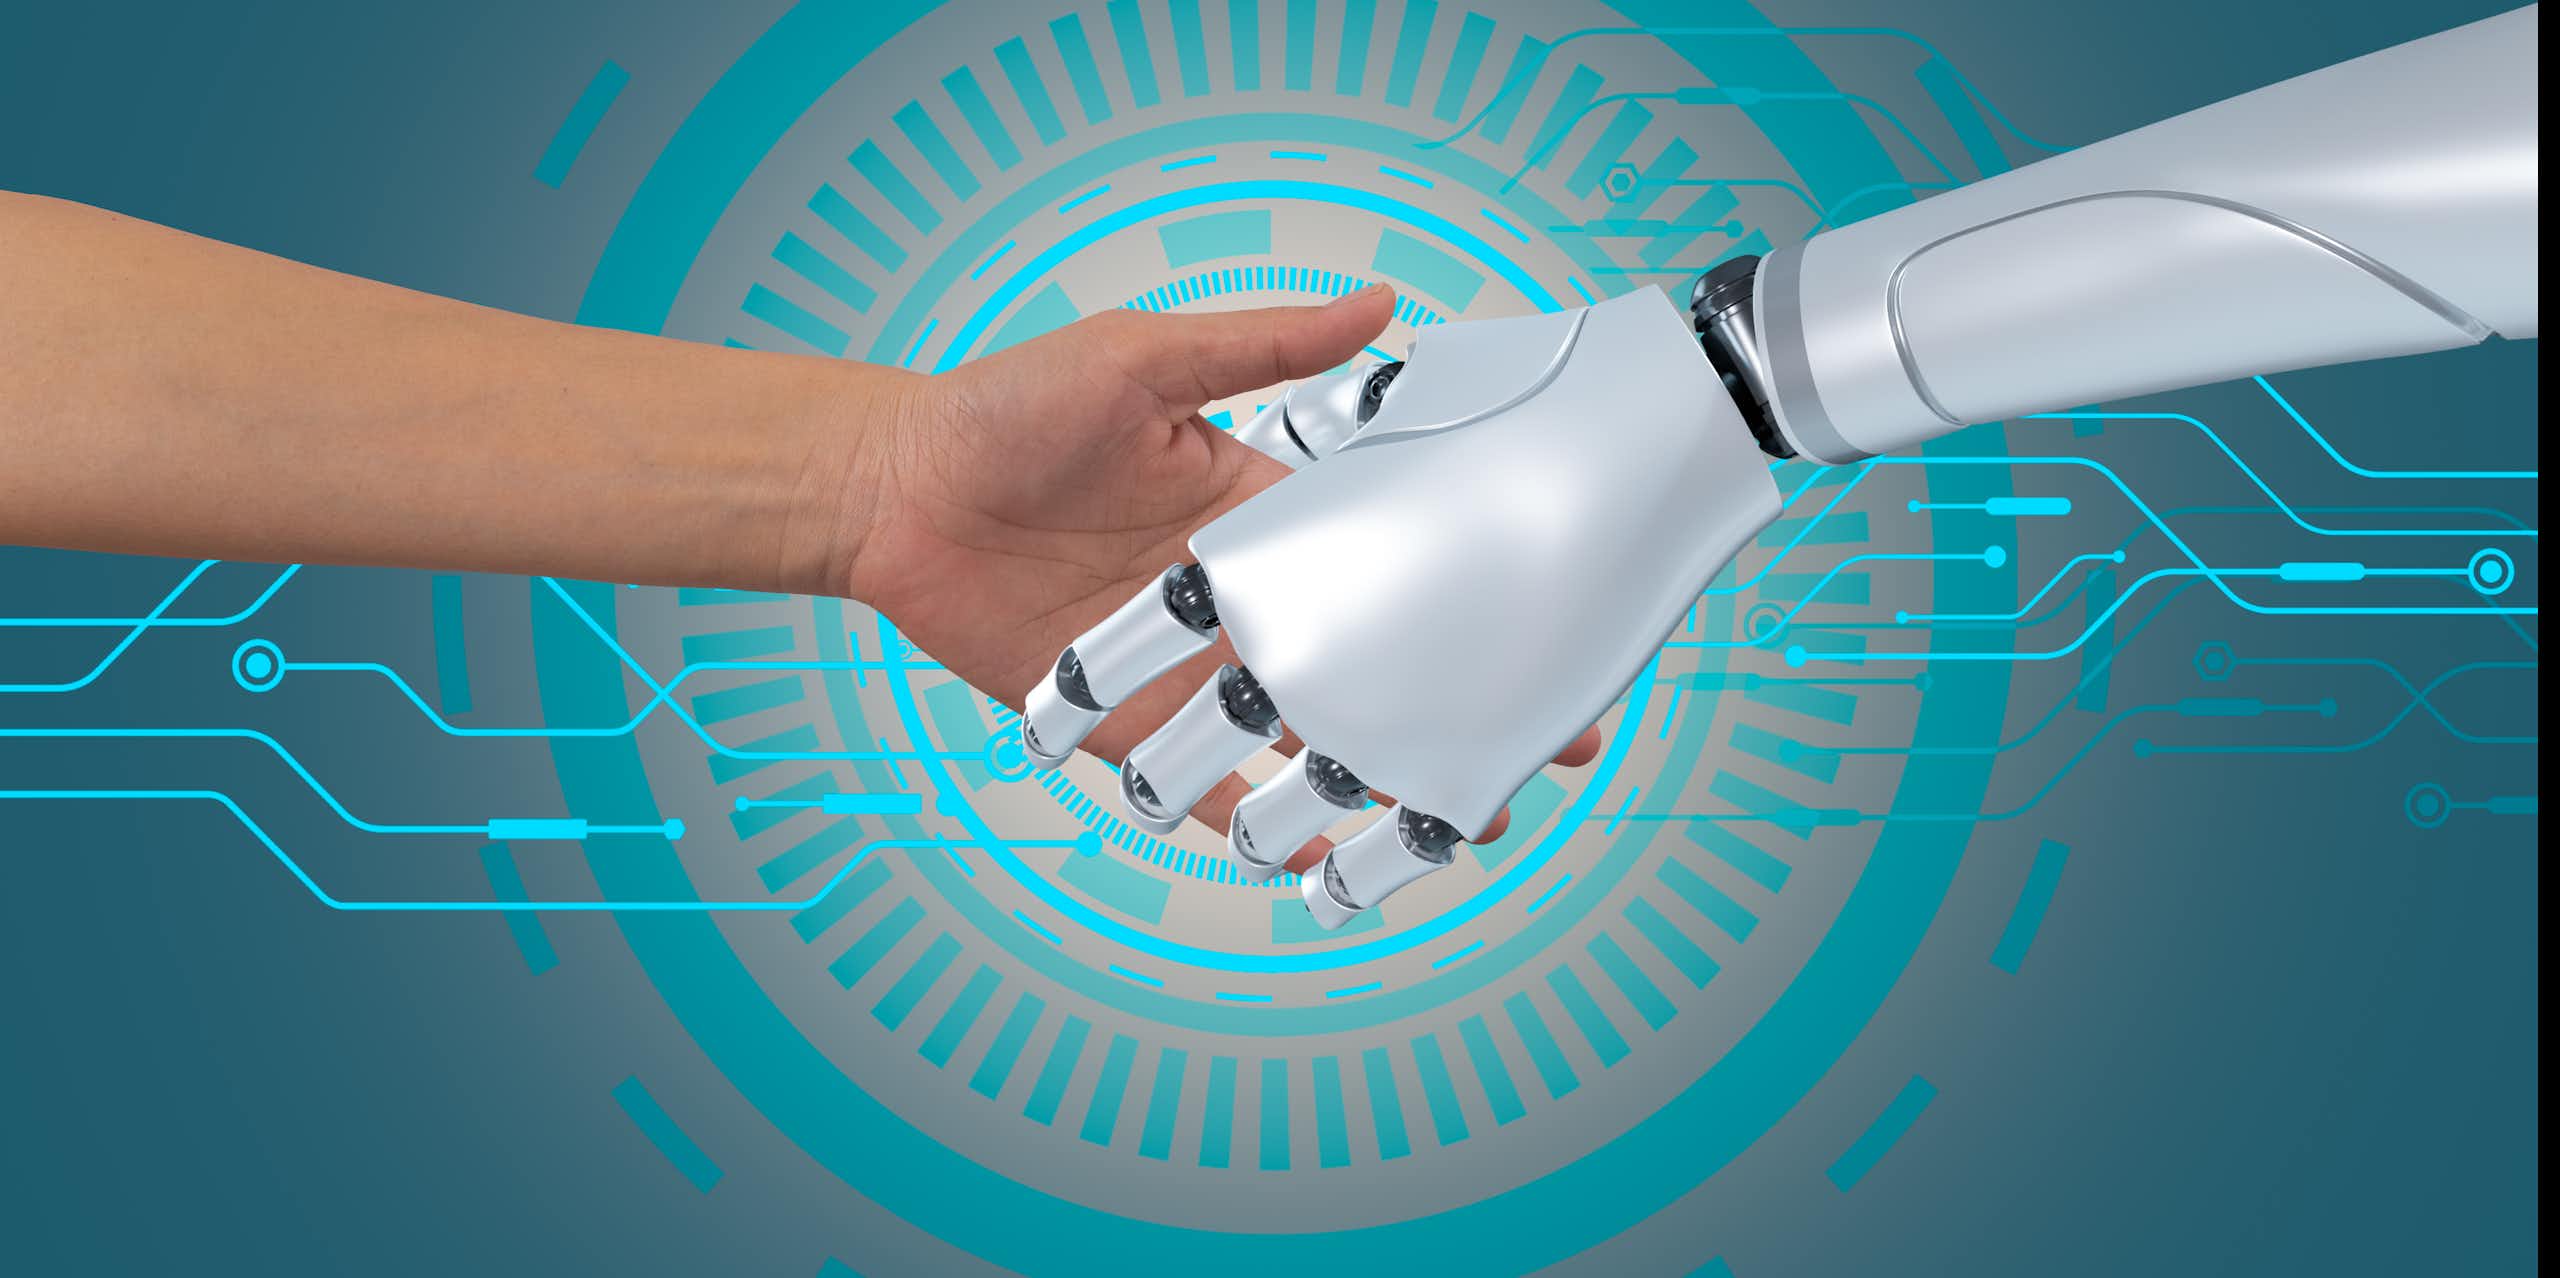 A human hand shaking a robot hand